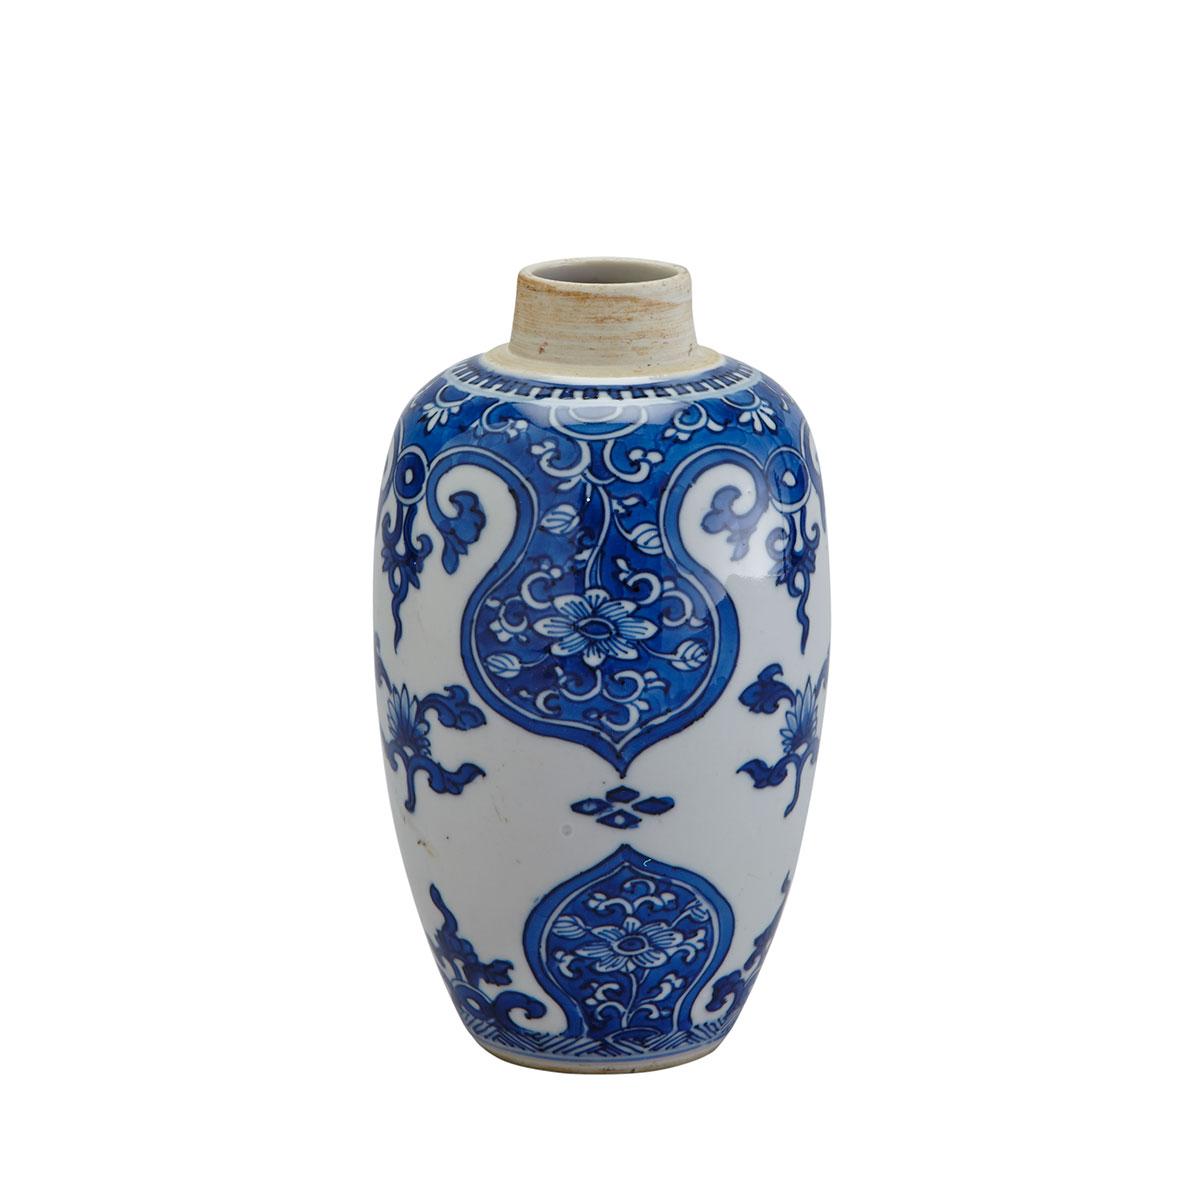 Blue and White Elongated Ginger Jar, Kangxi Period (1662-1722)